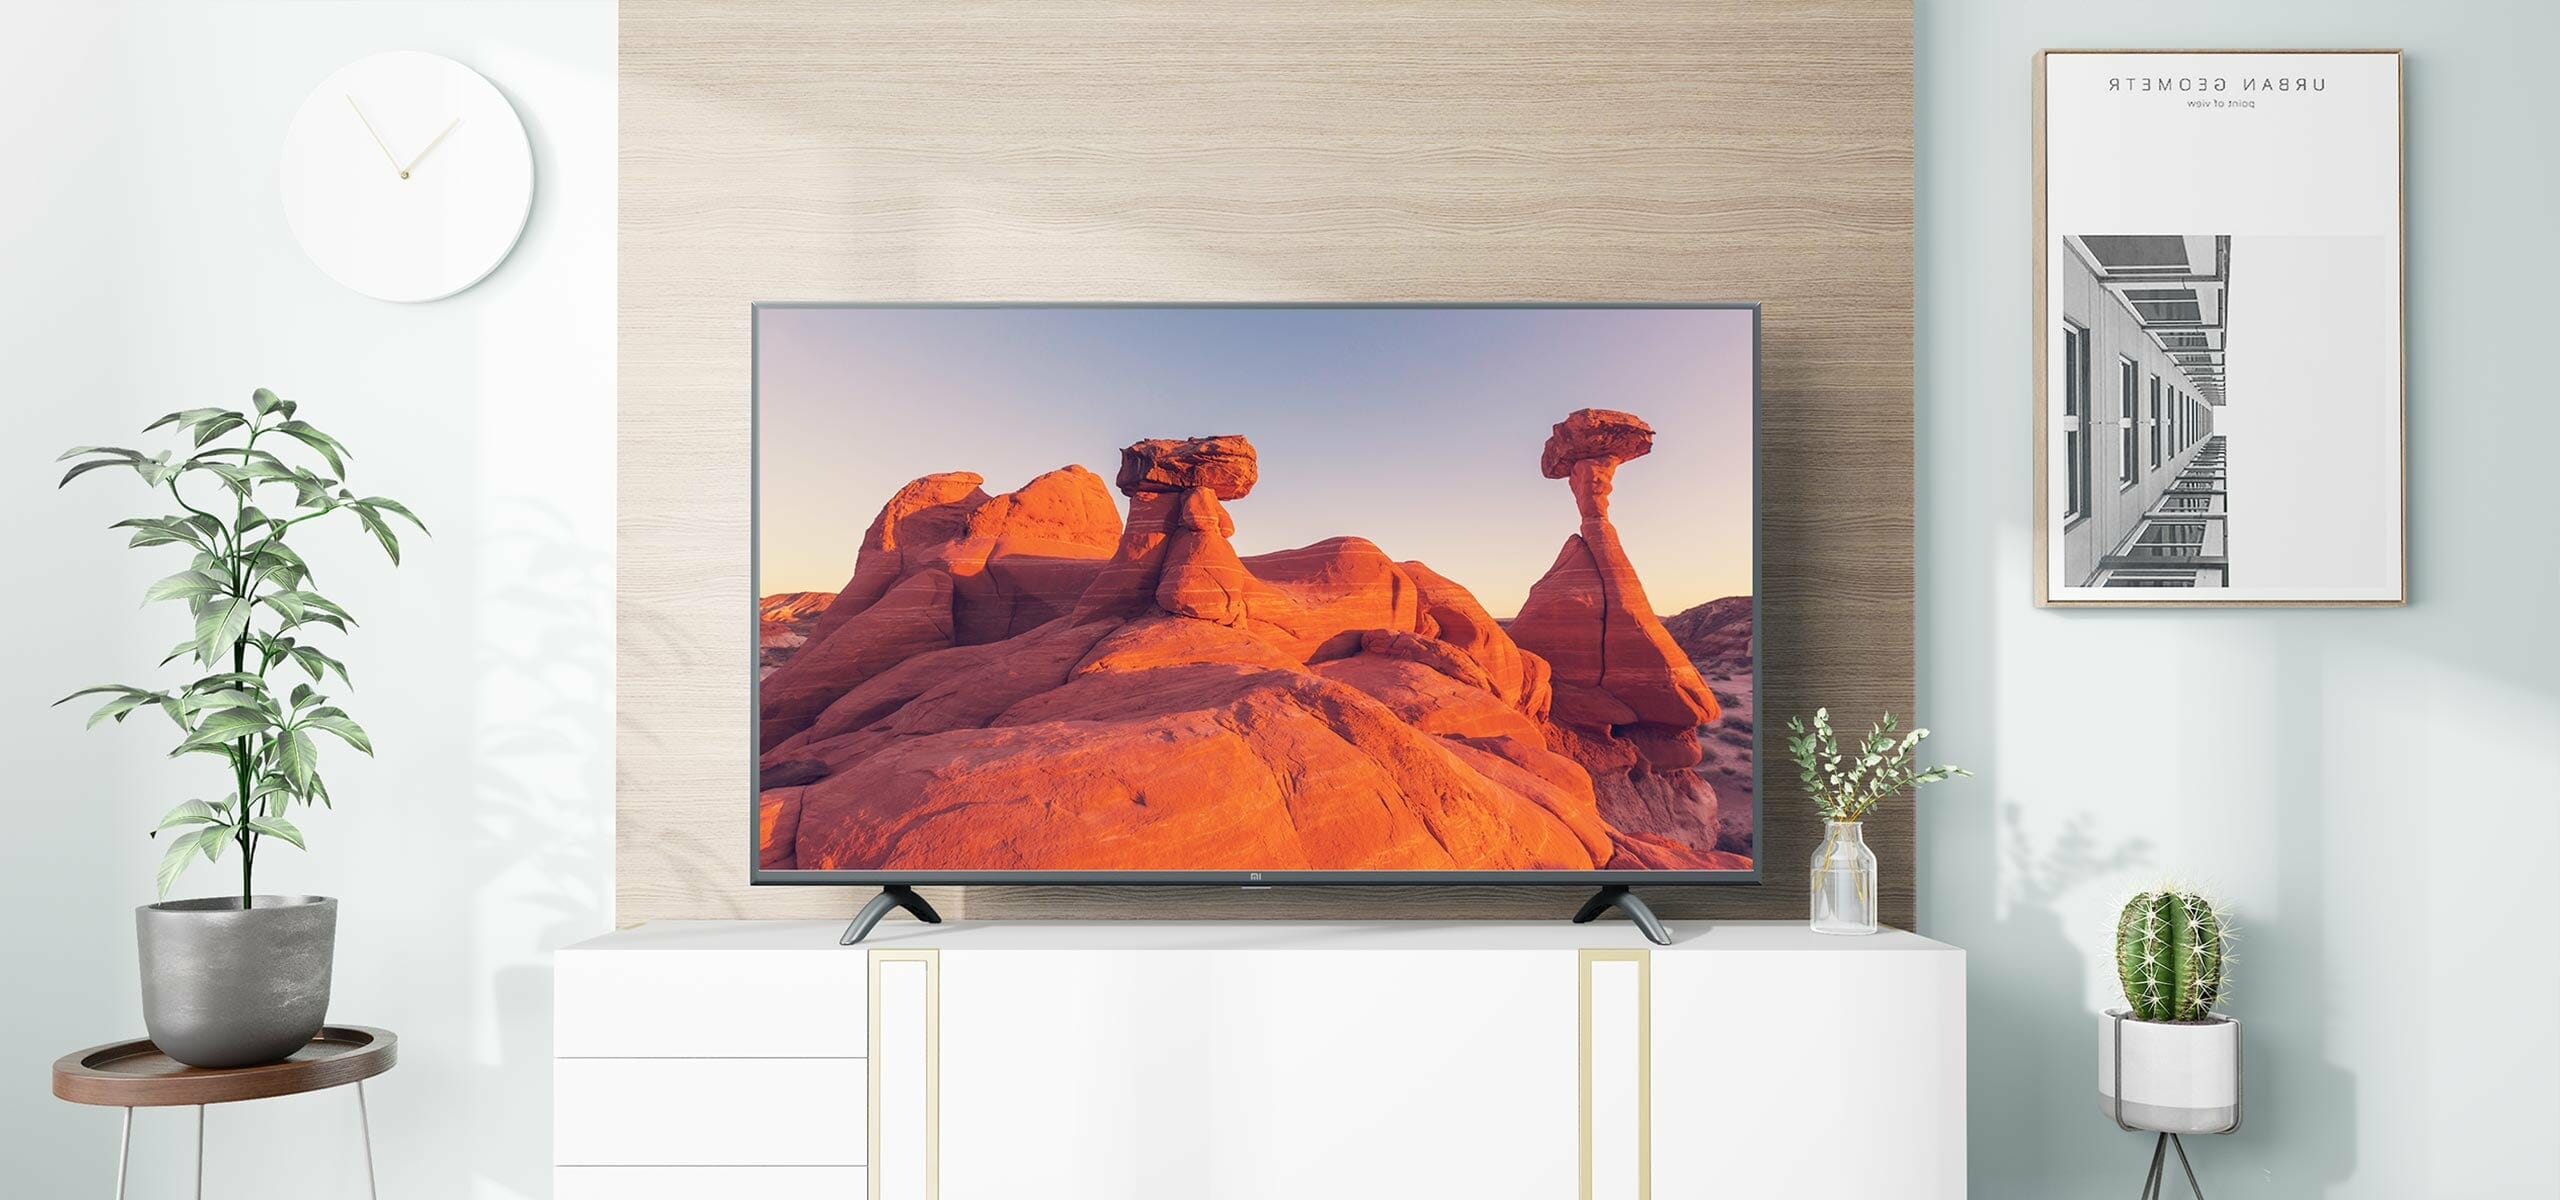 Xiaomi 140 см телевизор